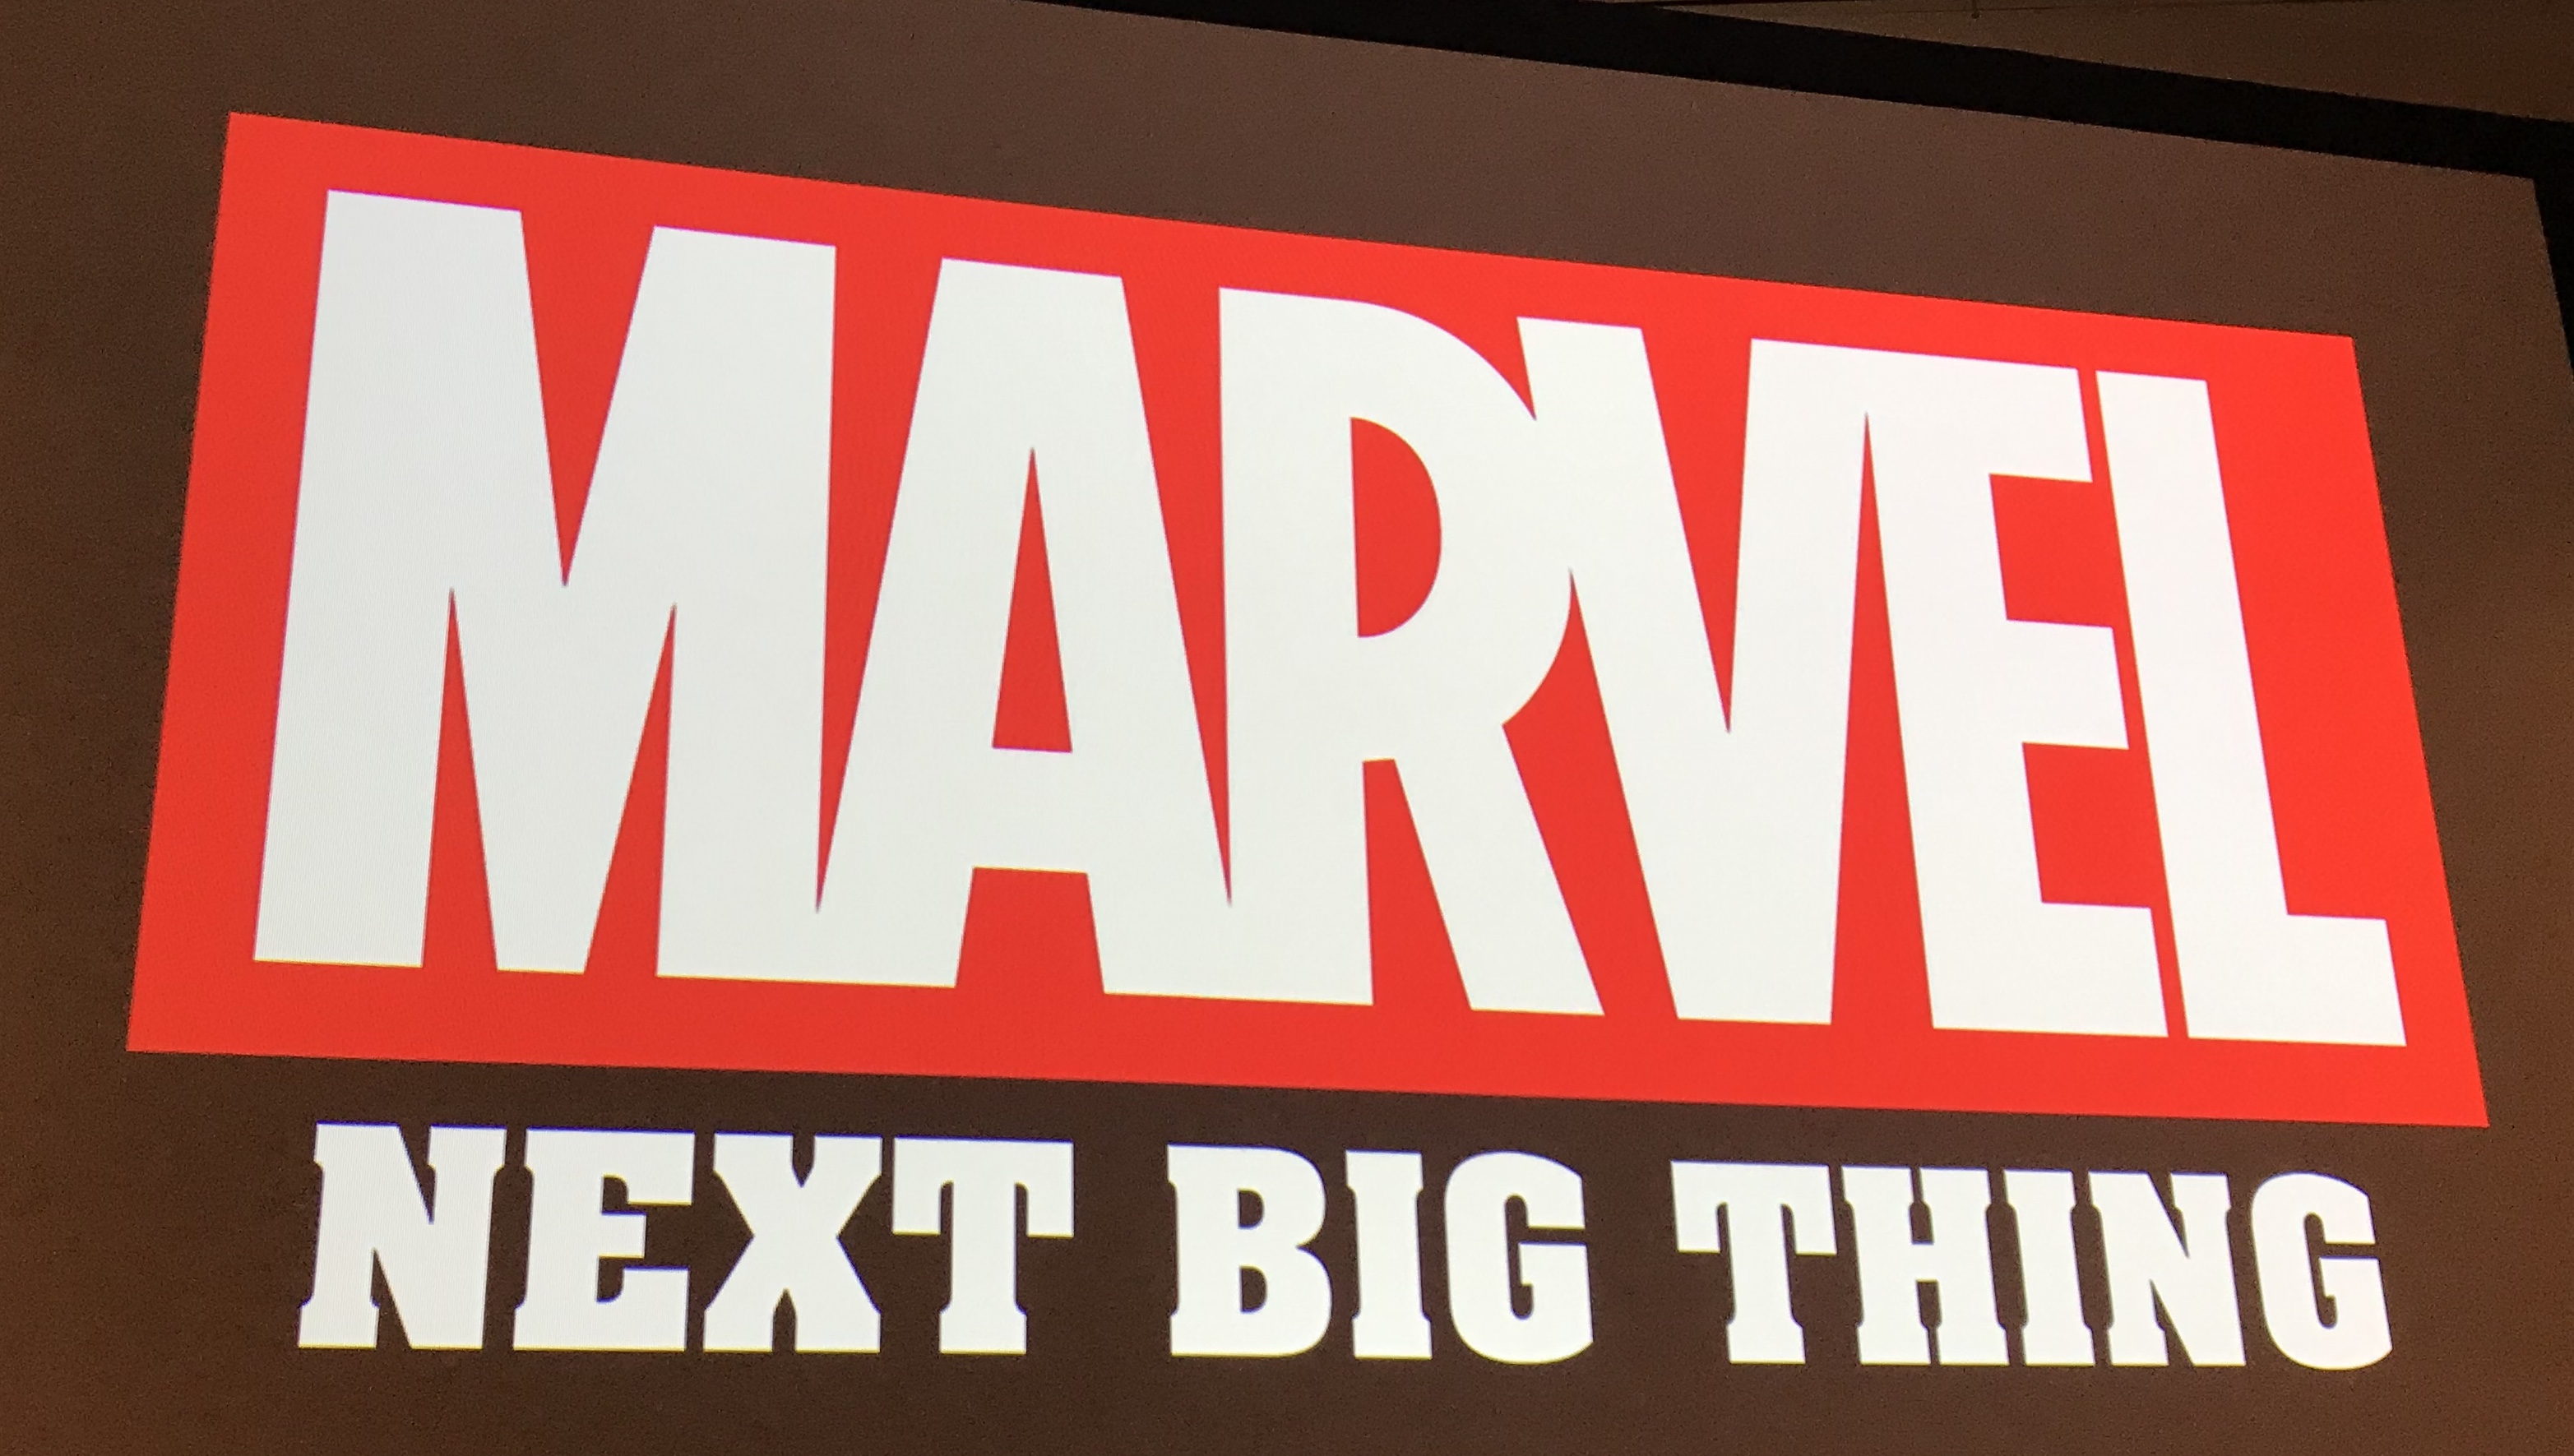 NYCC 2019: A look at Marvel's 'Next Big Things'